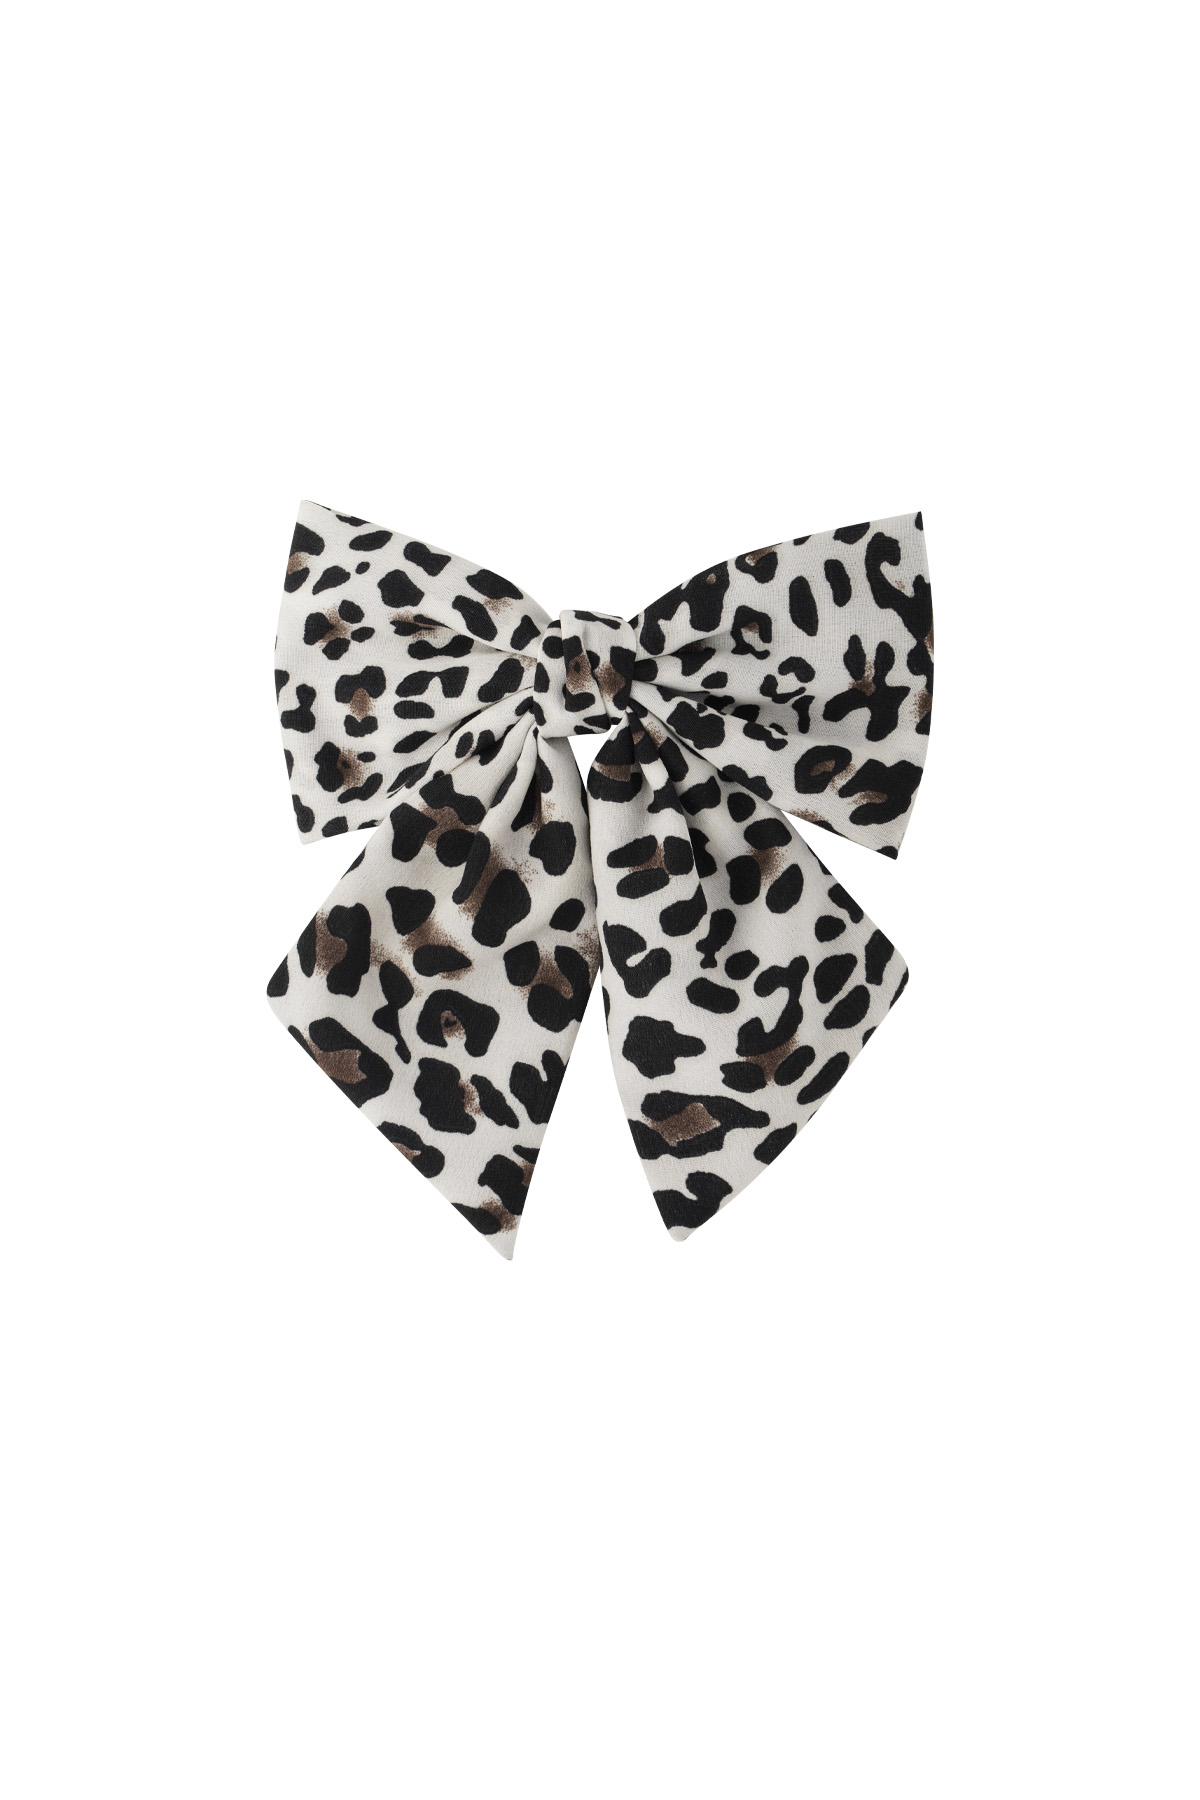 Panther print bow - black/white  